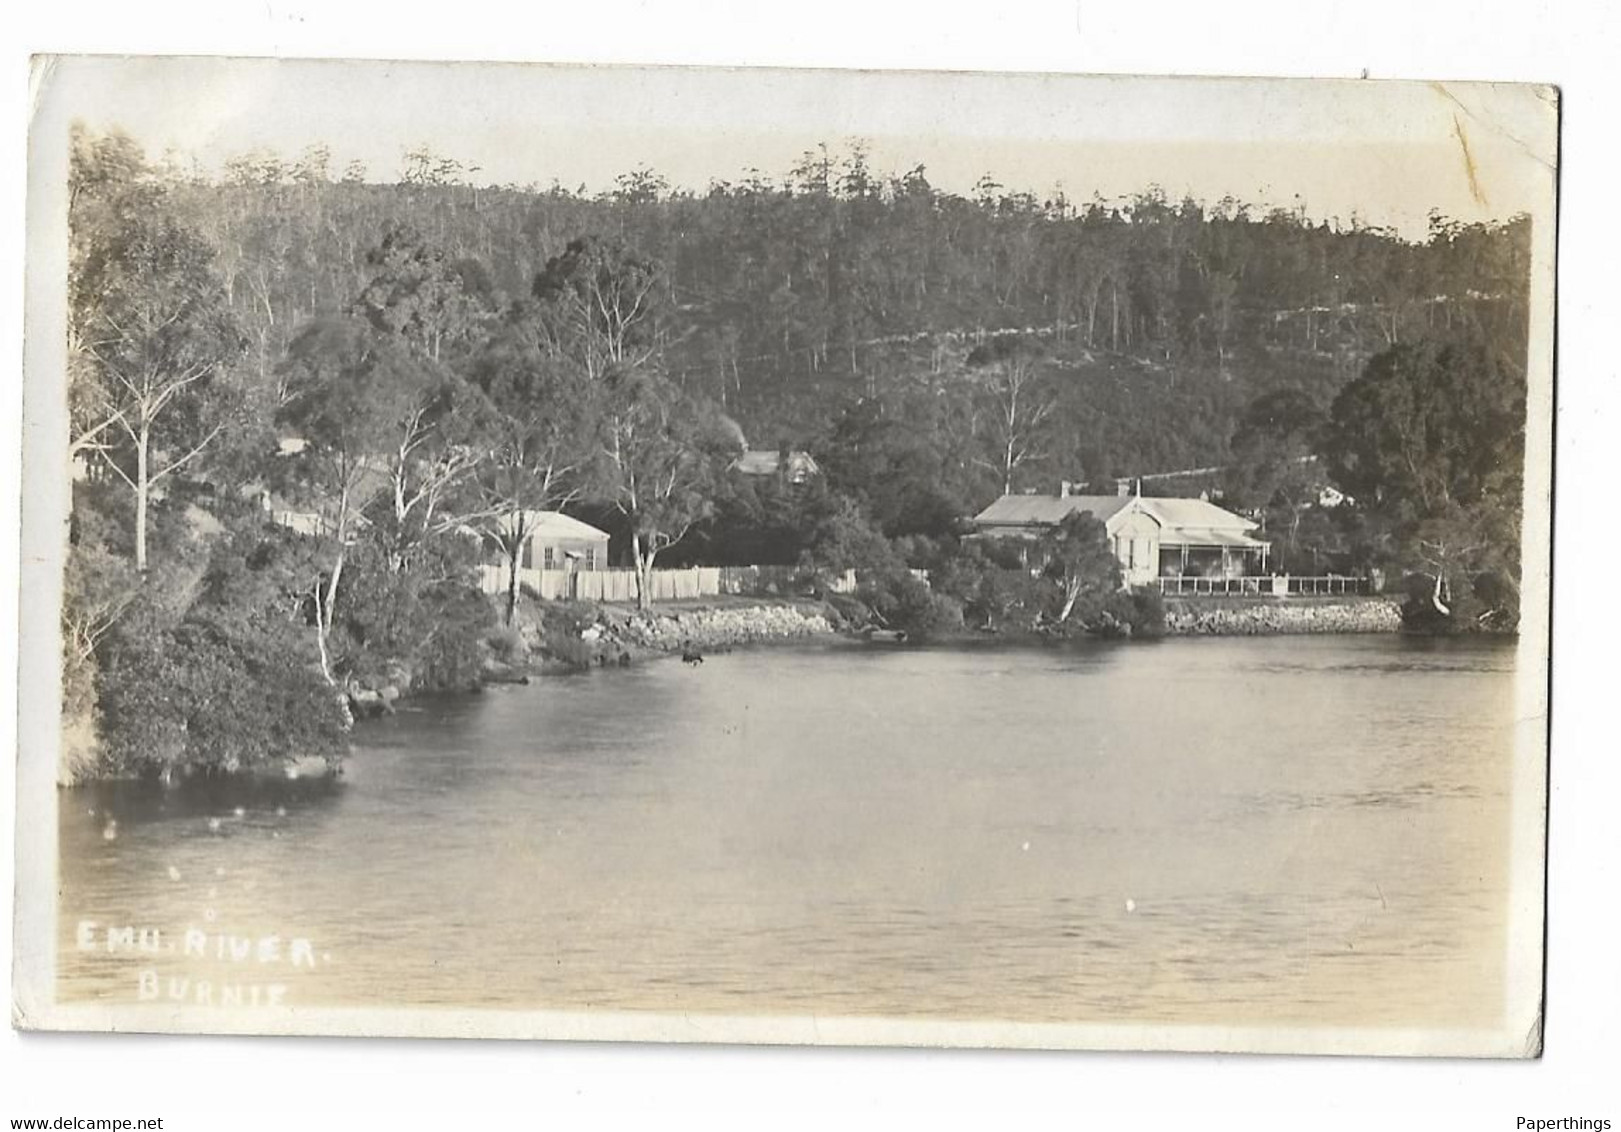 Privately Taken Real Photo Postcard, Australia, Tasmania, Burnie, Emu River, Landscape, House, 1919. - Hobart